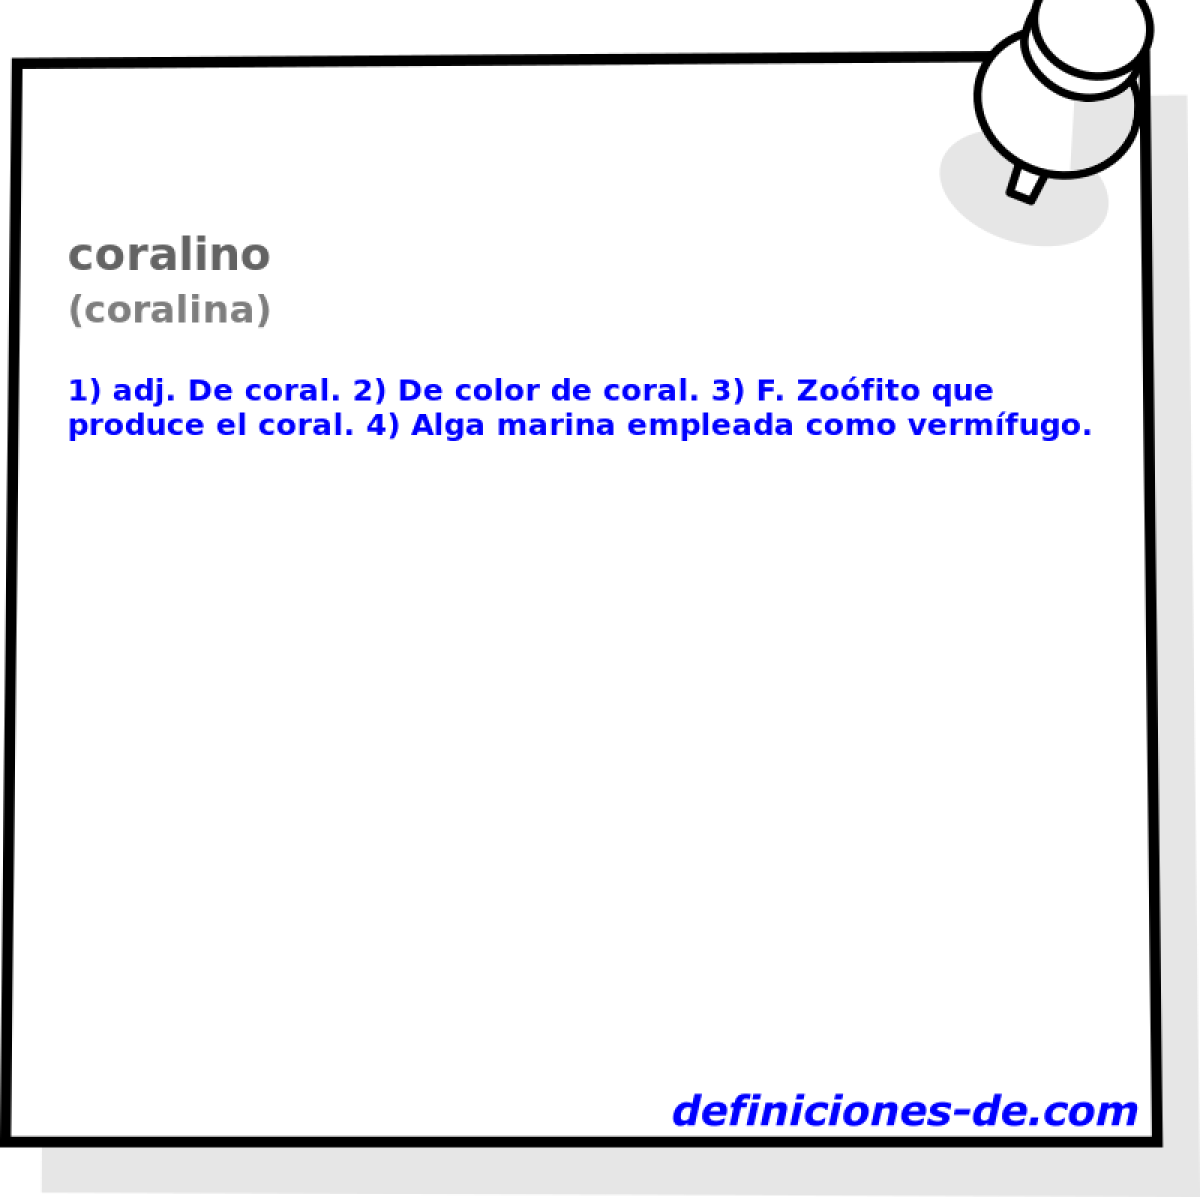 coralino (coralina)